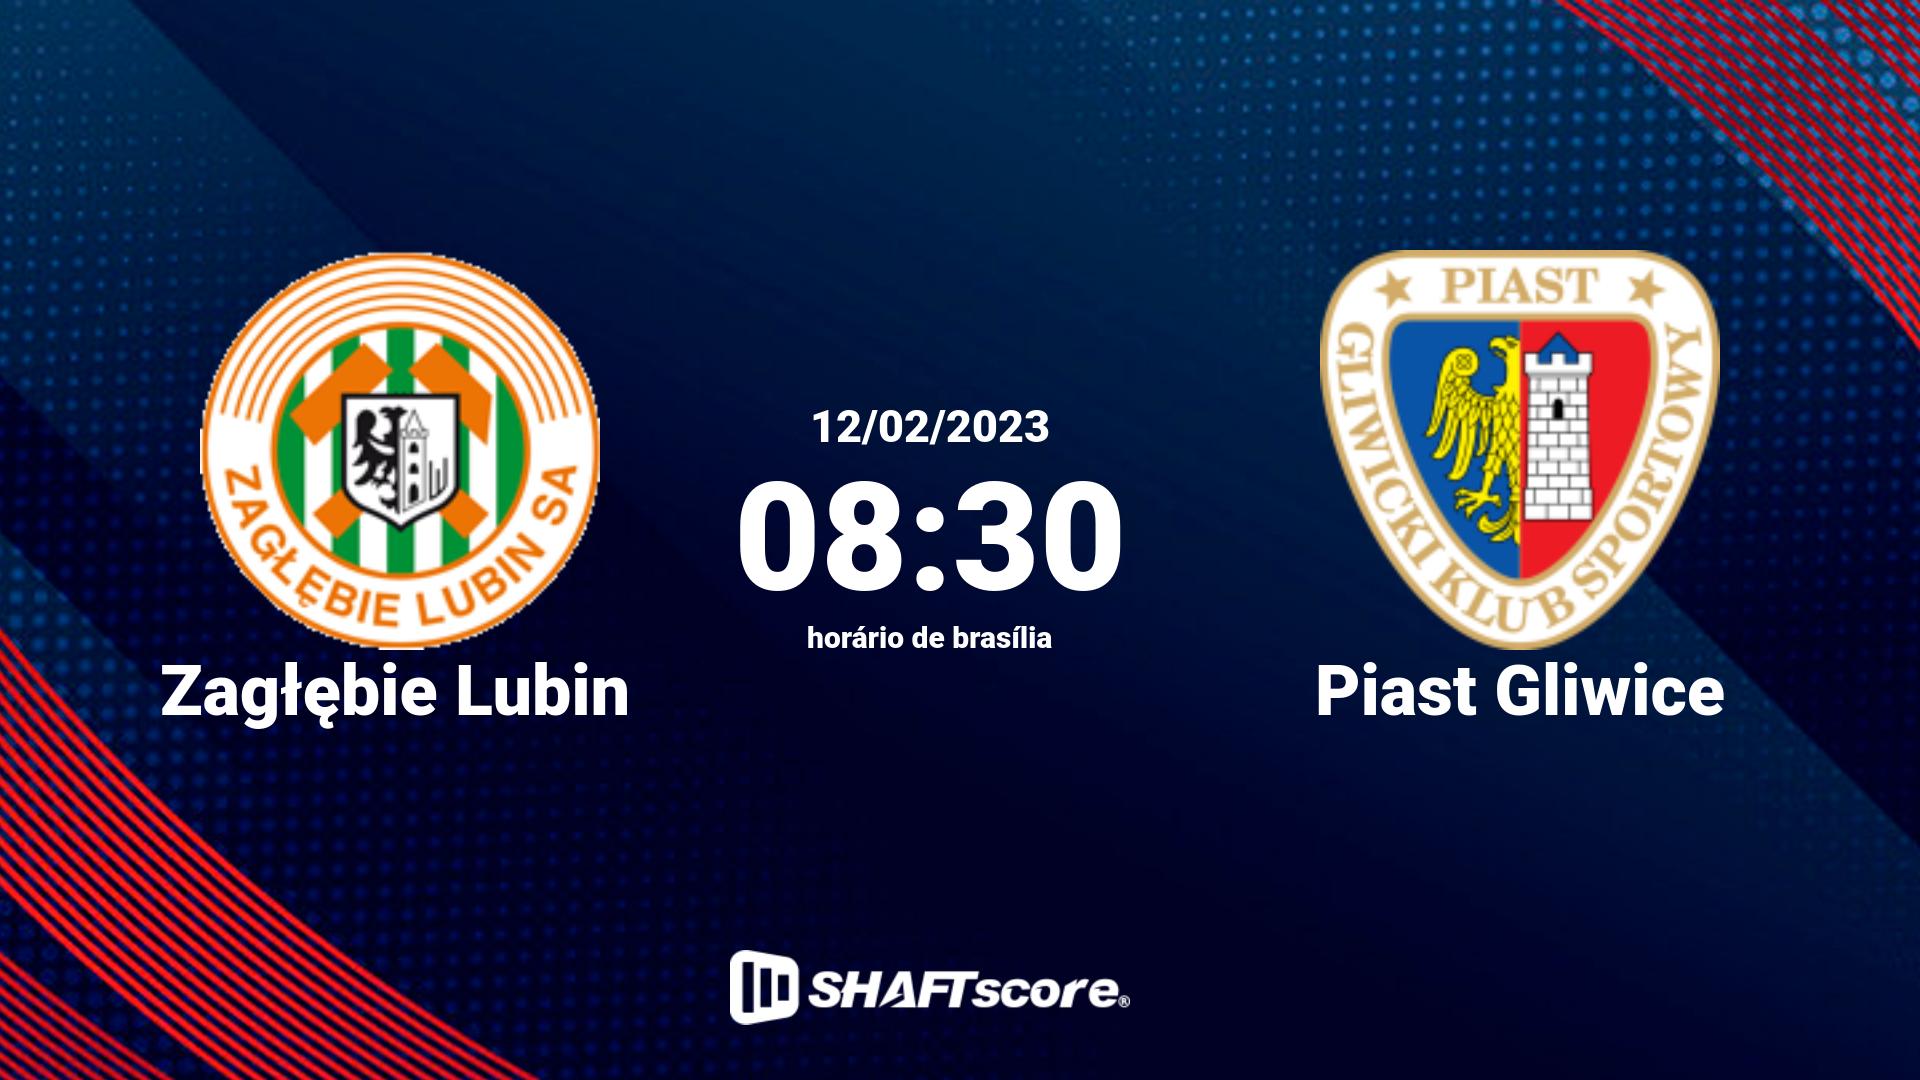 Estatísticas do jogo Zagłębie Lubin vs Piast Gliwice 12.02 08:30